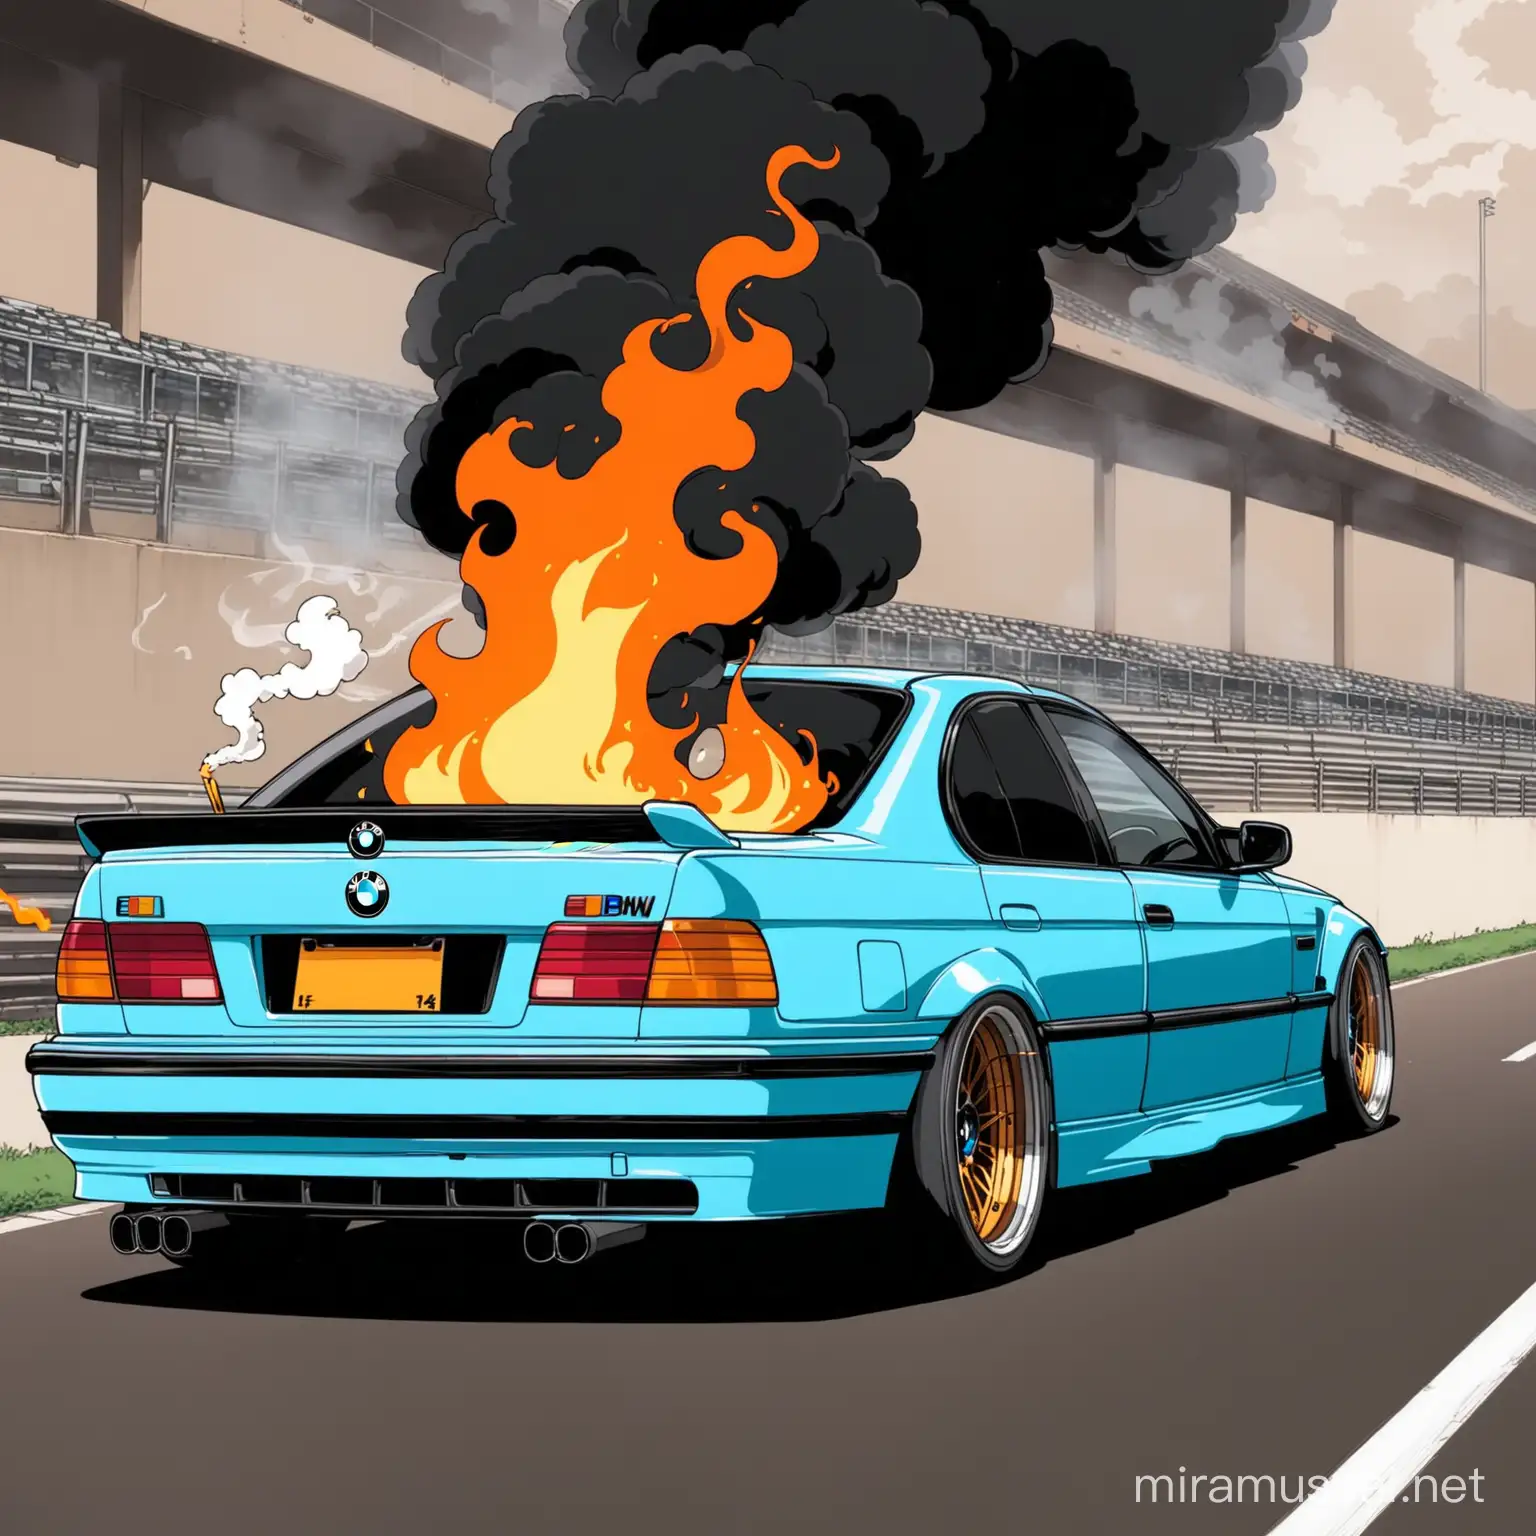 bmw e36 exhaust flames, popping, smoking, anime like, cartoon